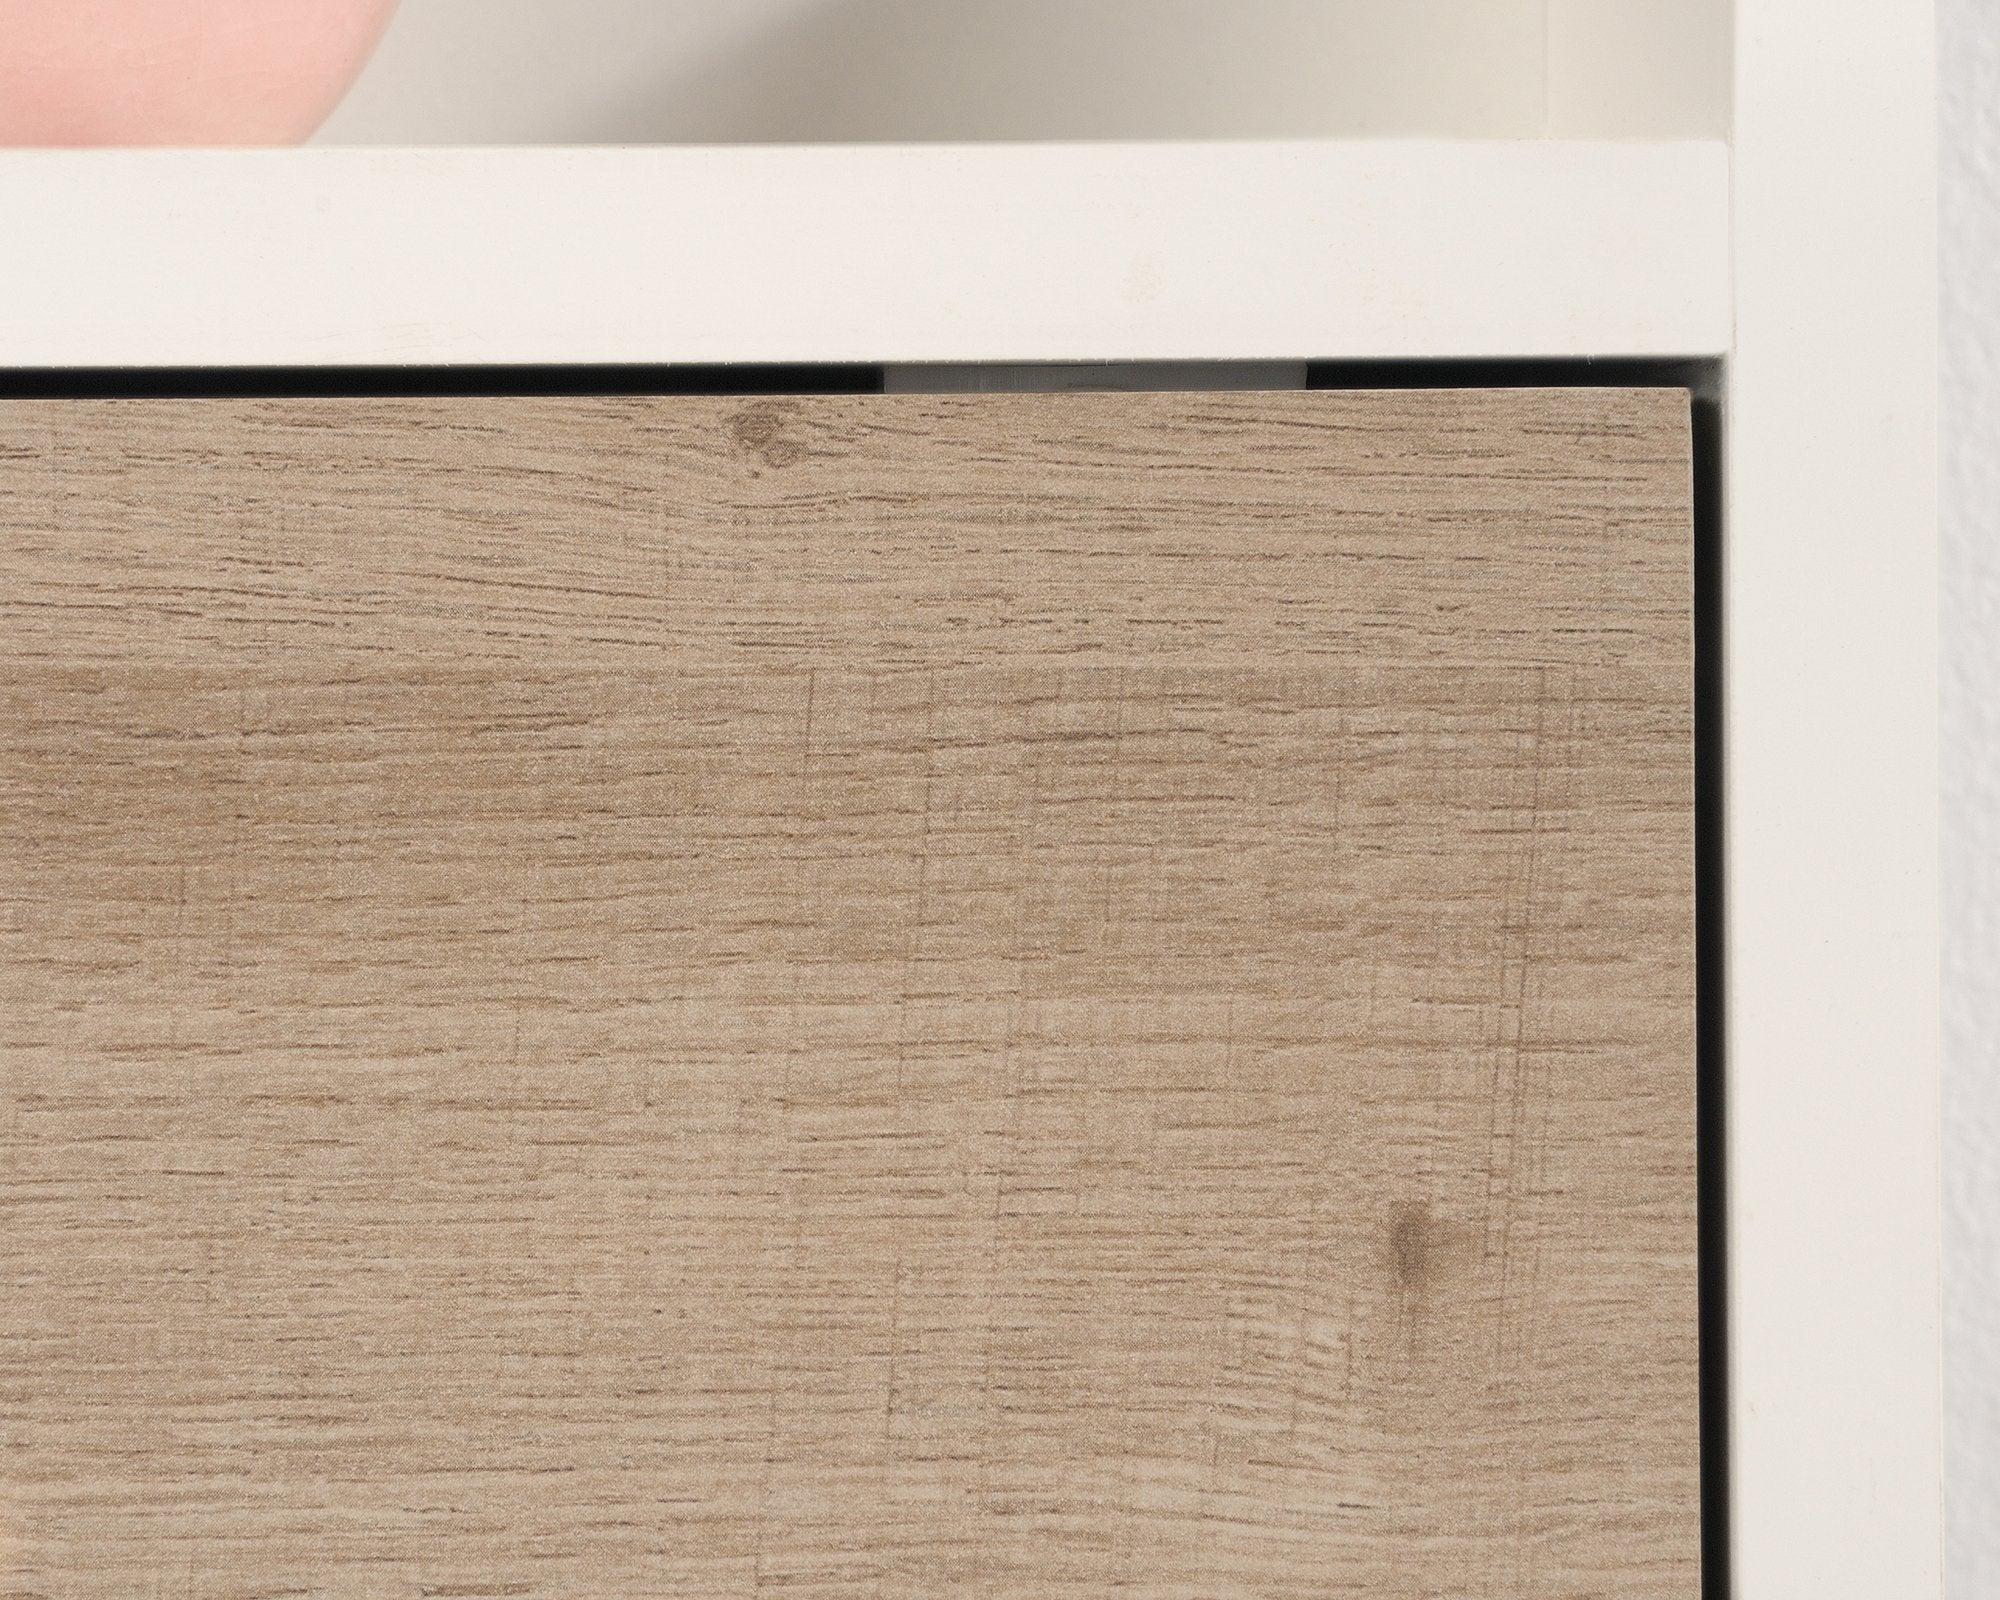 Avon leather handled foldaway wall desk - white - image 7